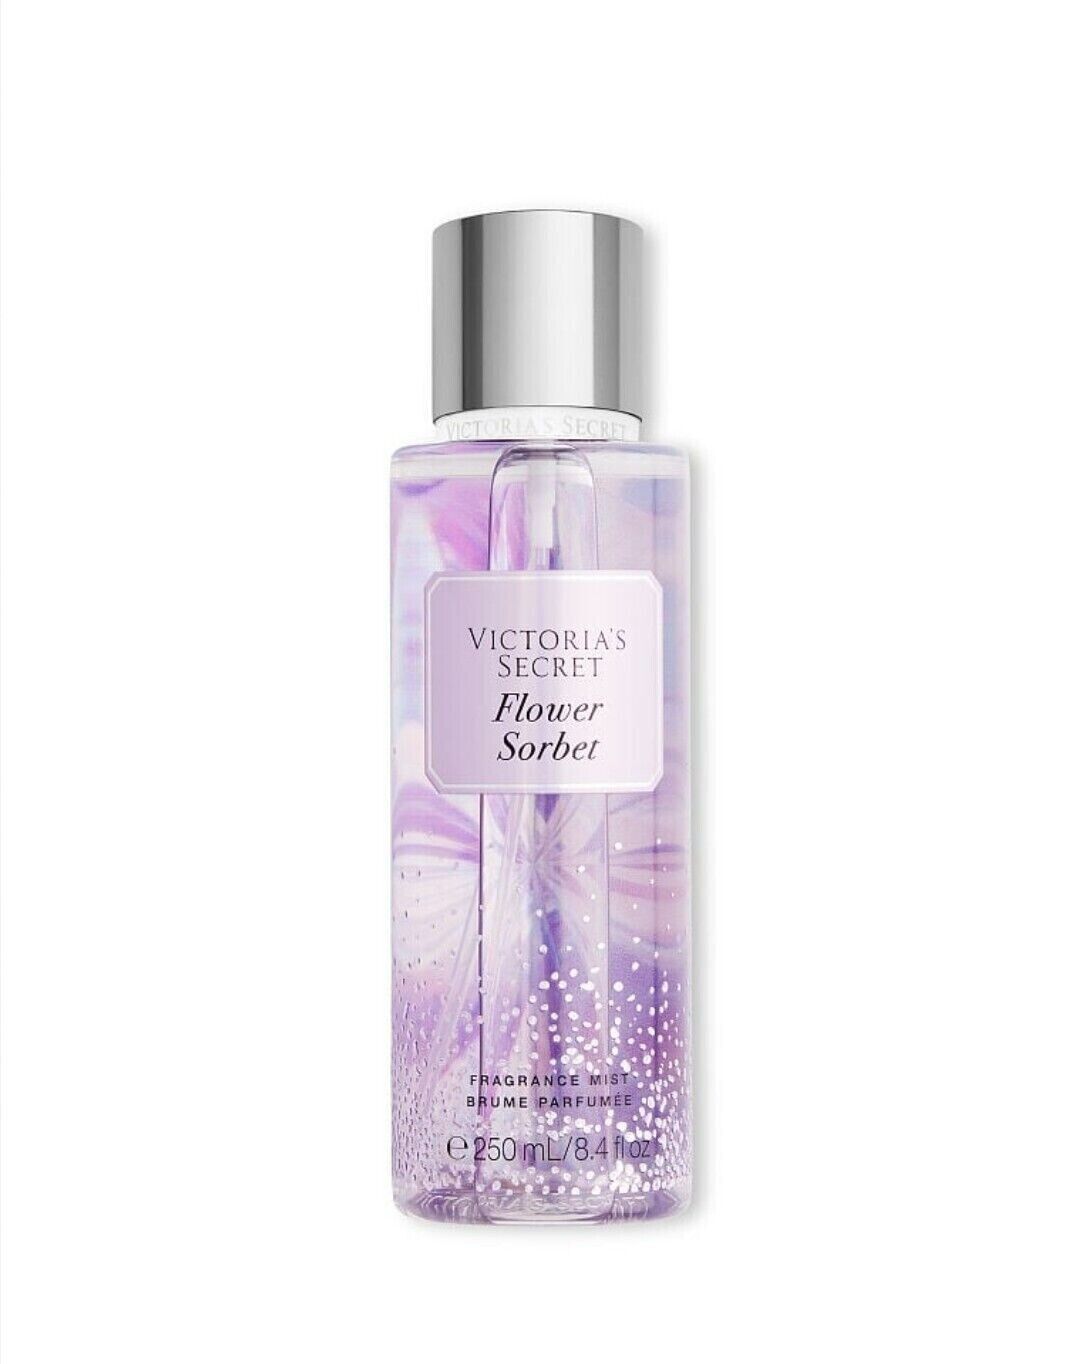 Parfums Flower Sorbet de la marque Victoria's Secret mixte 